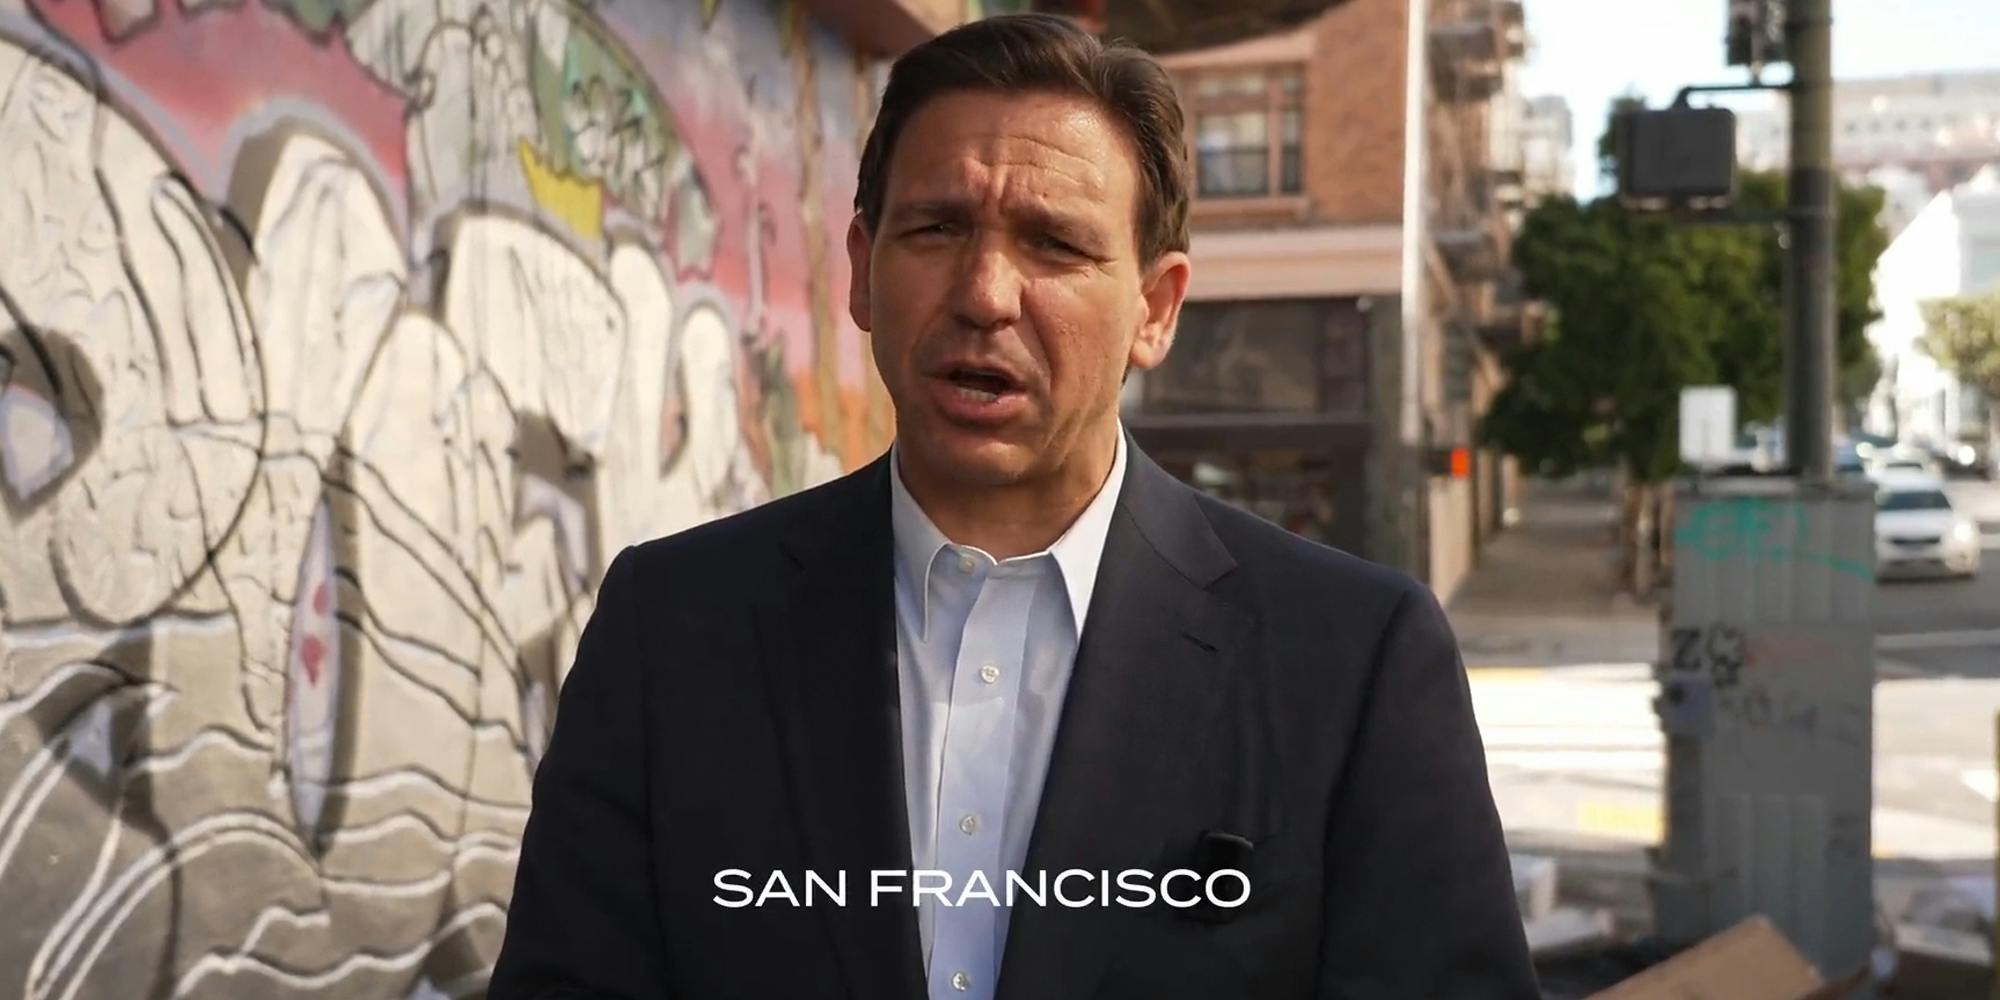 Ron DeSantis speaking on sidewalk in town with caption "San Francisco"